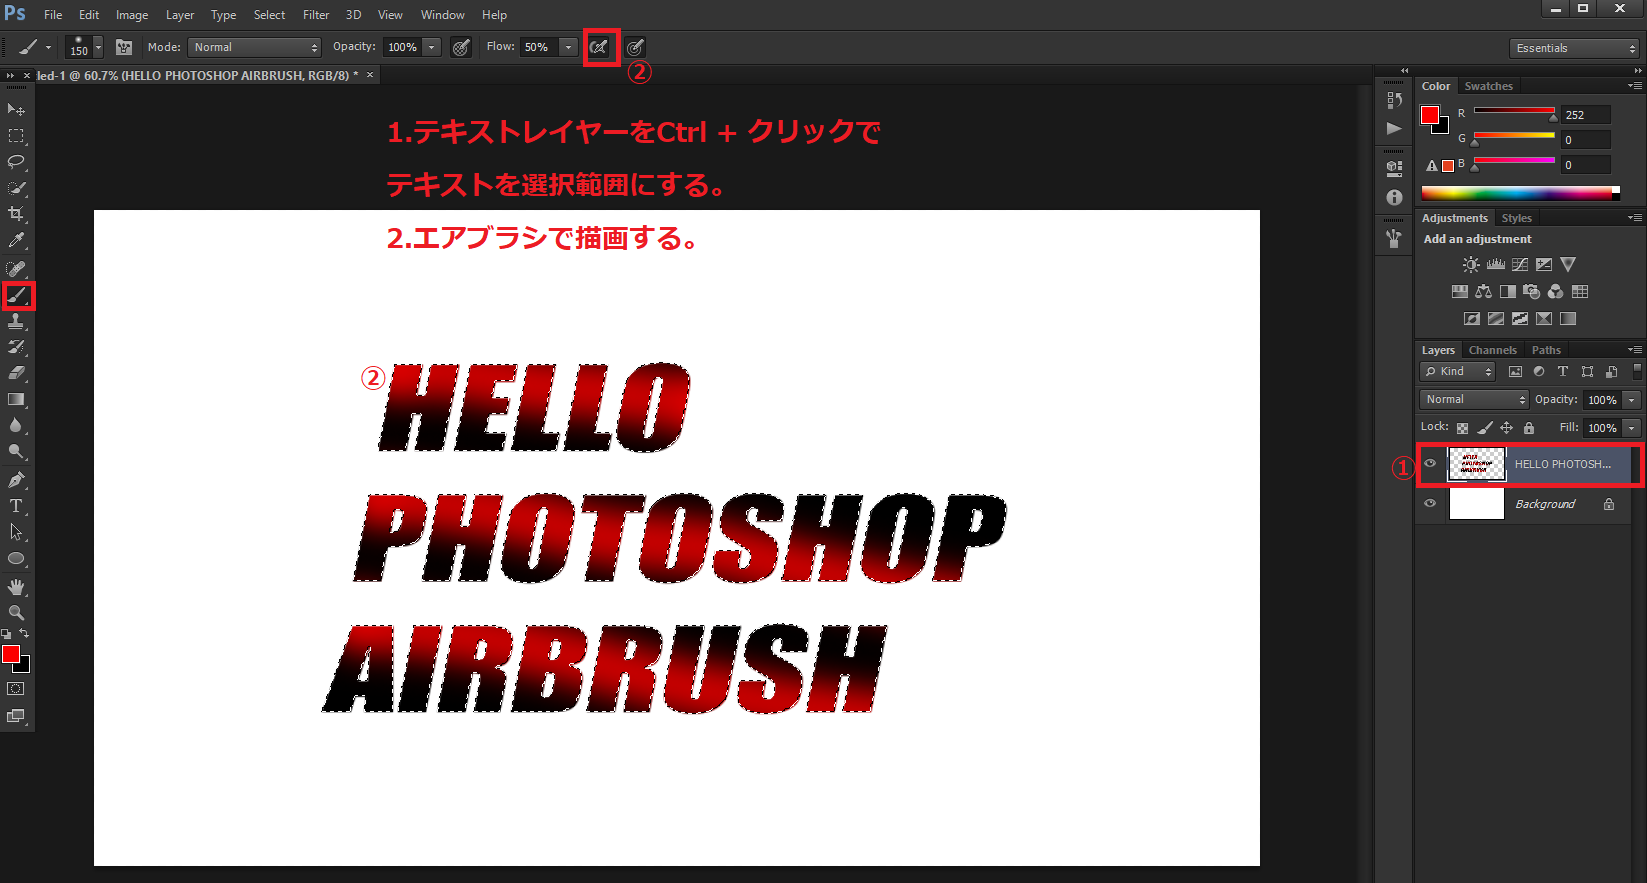 photoshop airbrush(2)